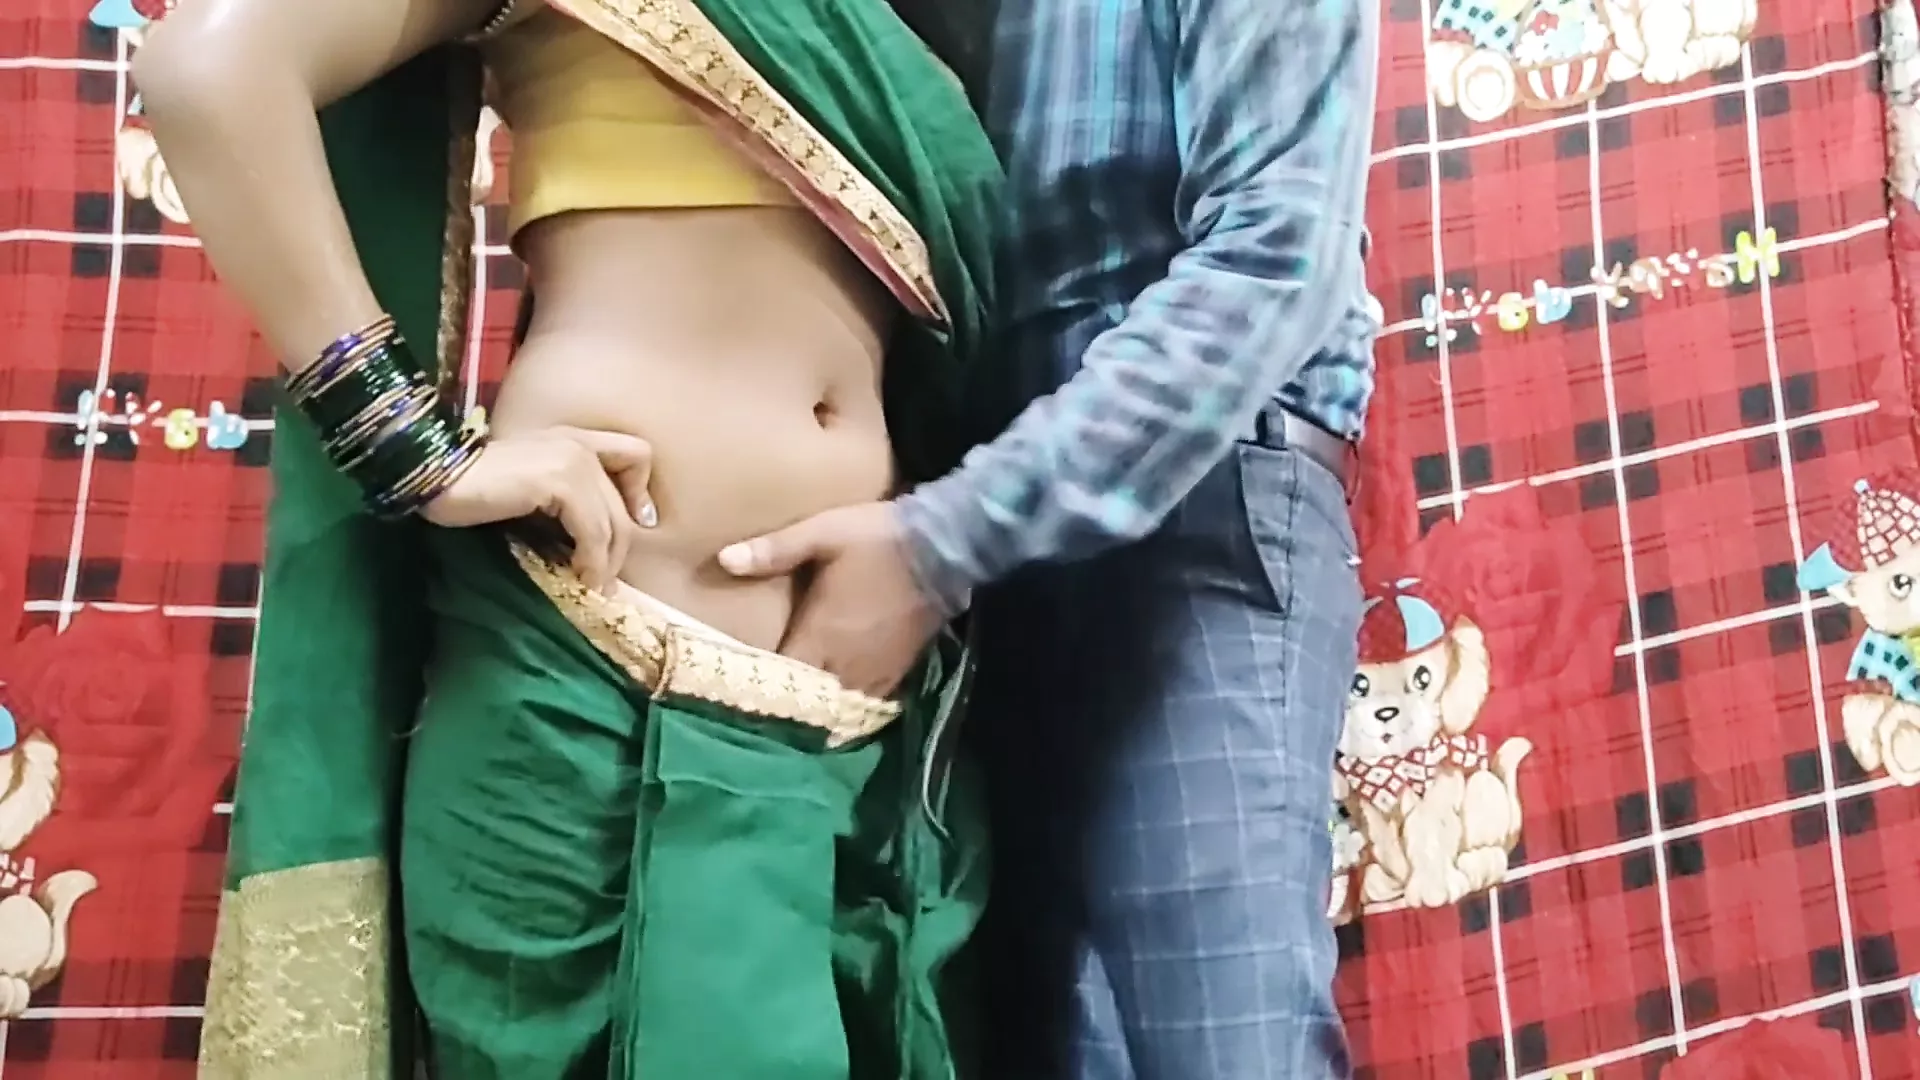 Marathi Girl Xxx - Marathi girl hard fucking, Indian maid sex at home, video